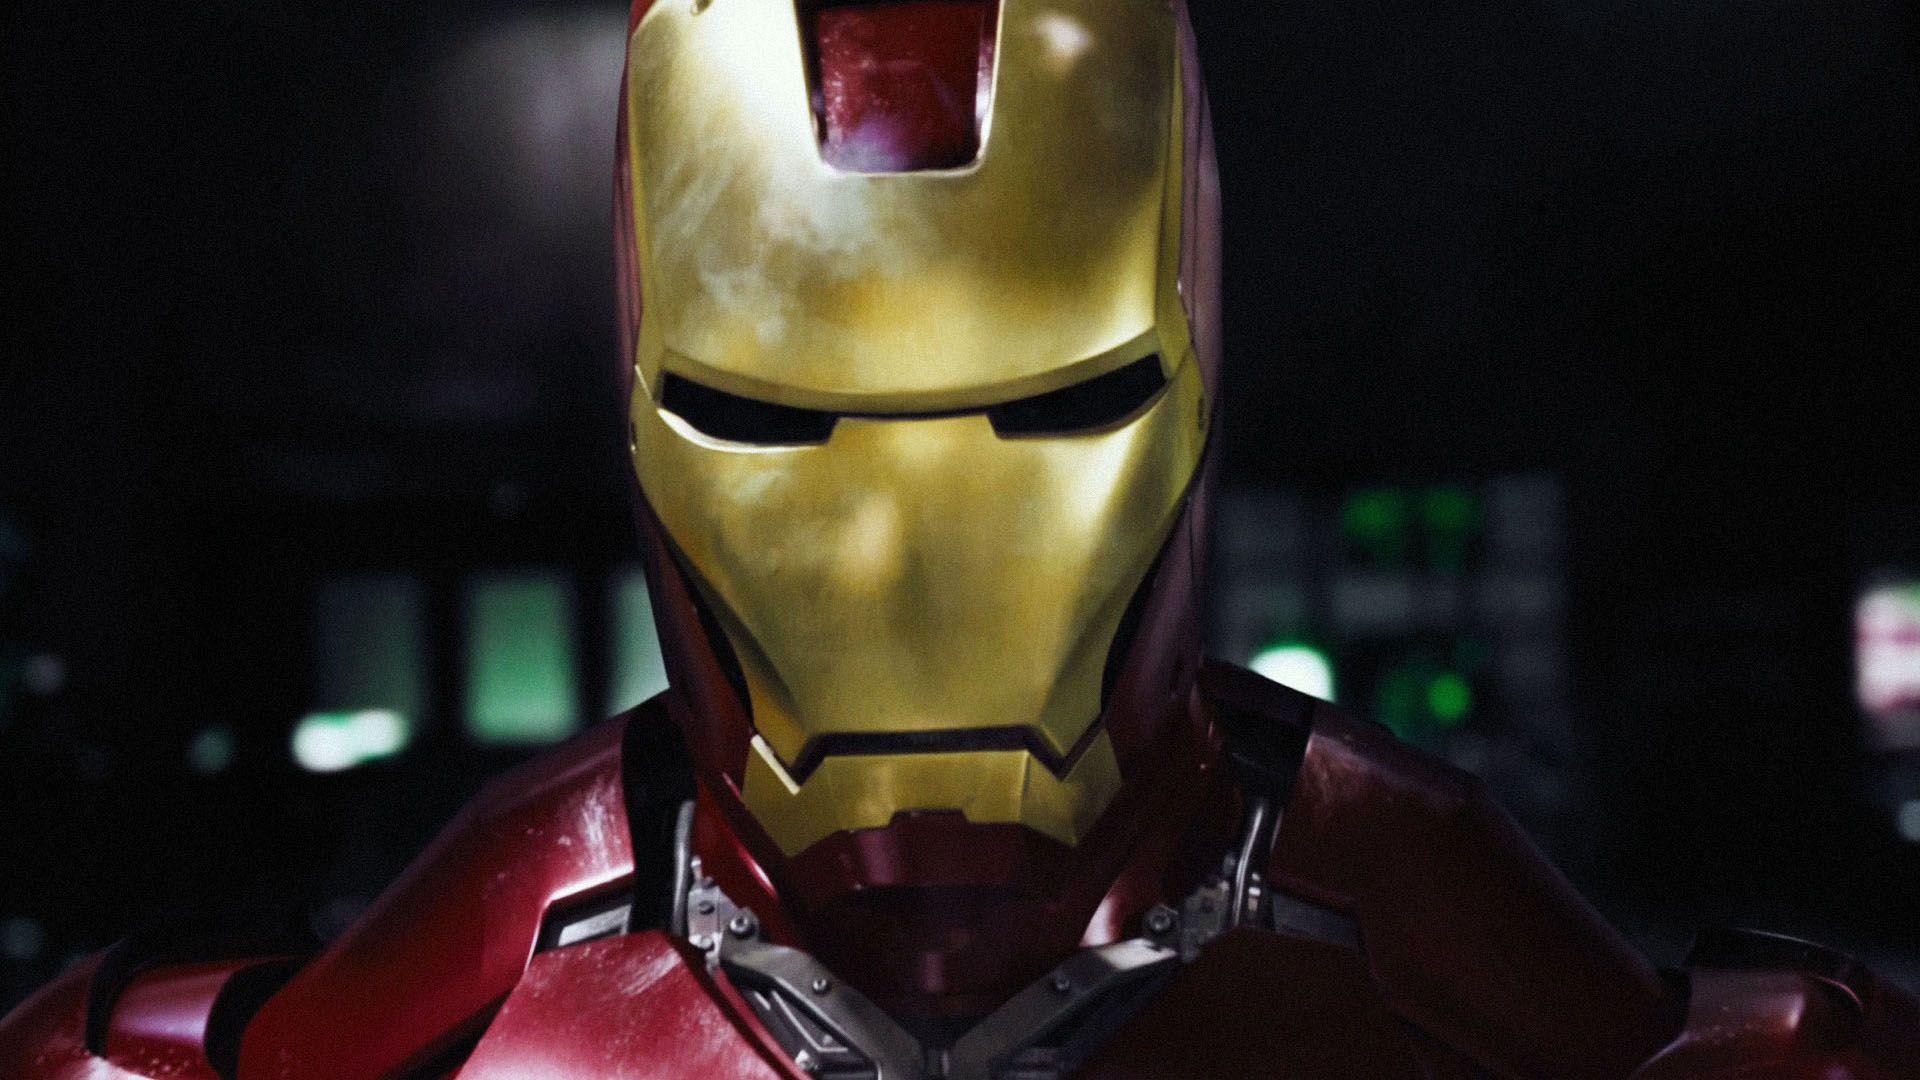 Iron Man 2 HD Wallpaper